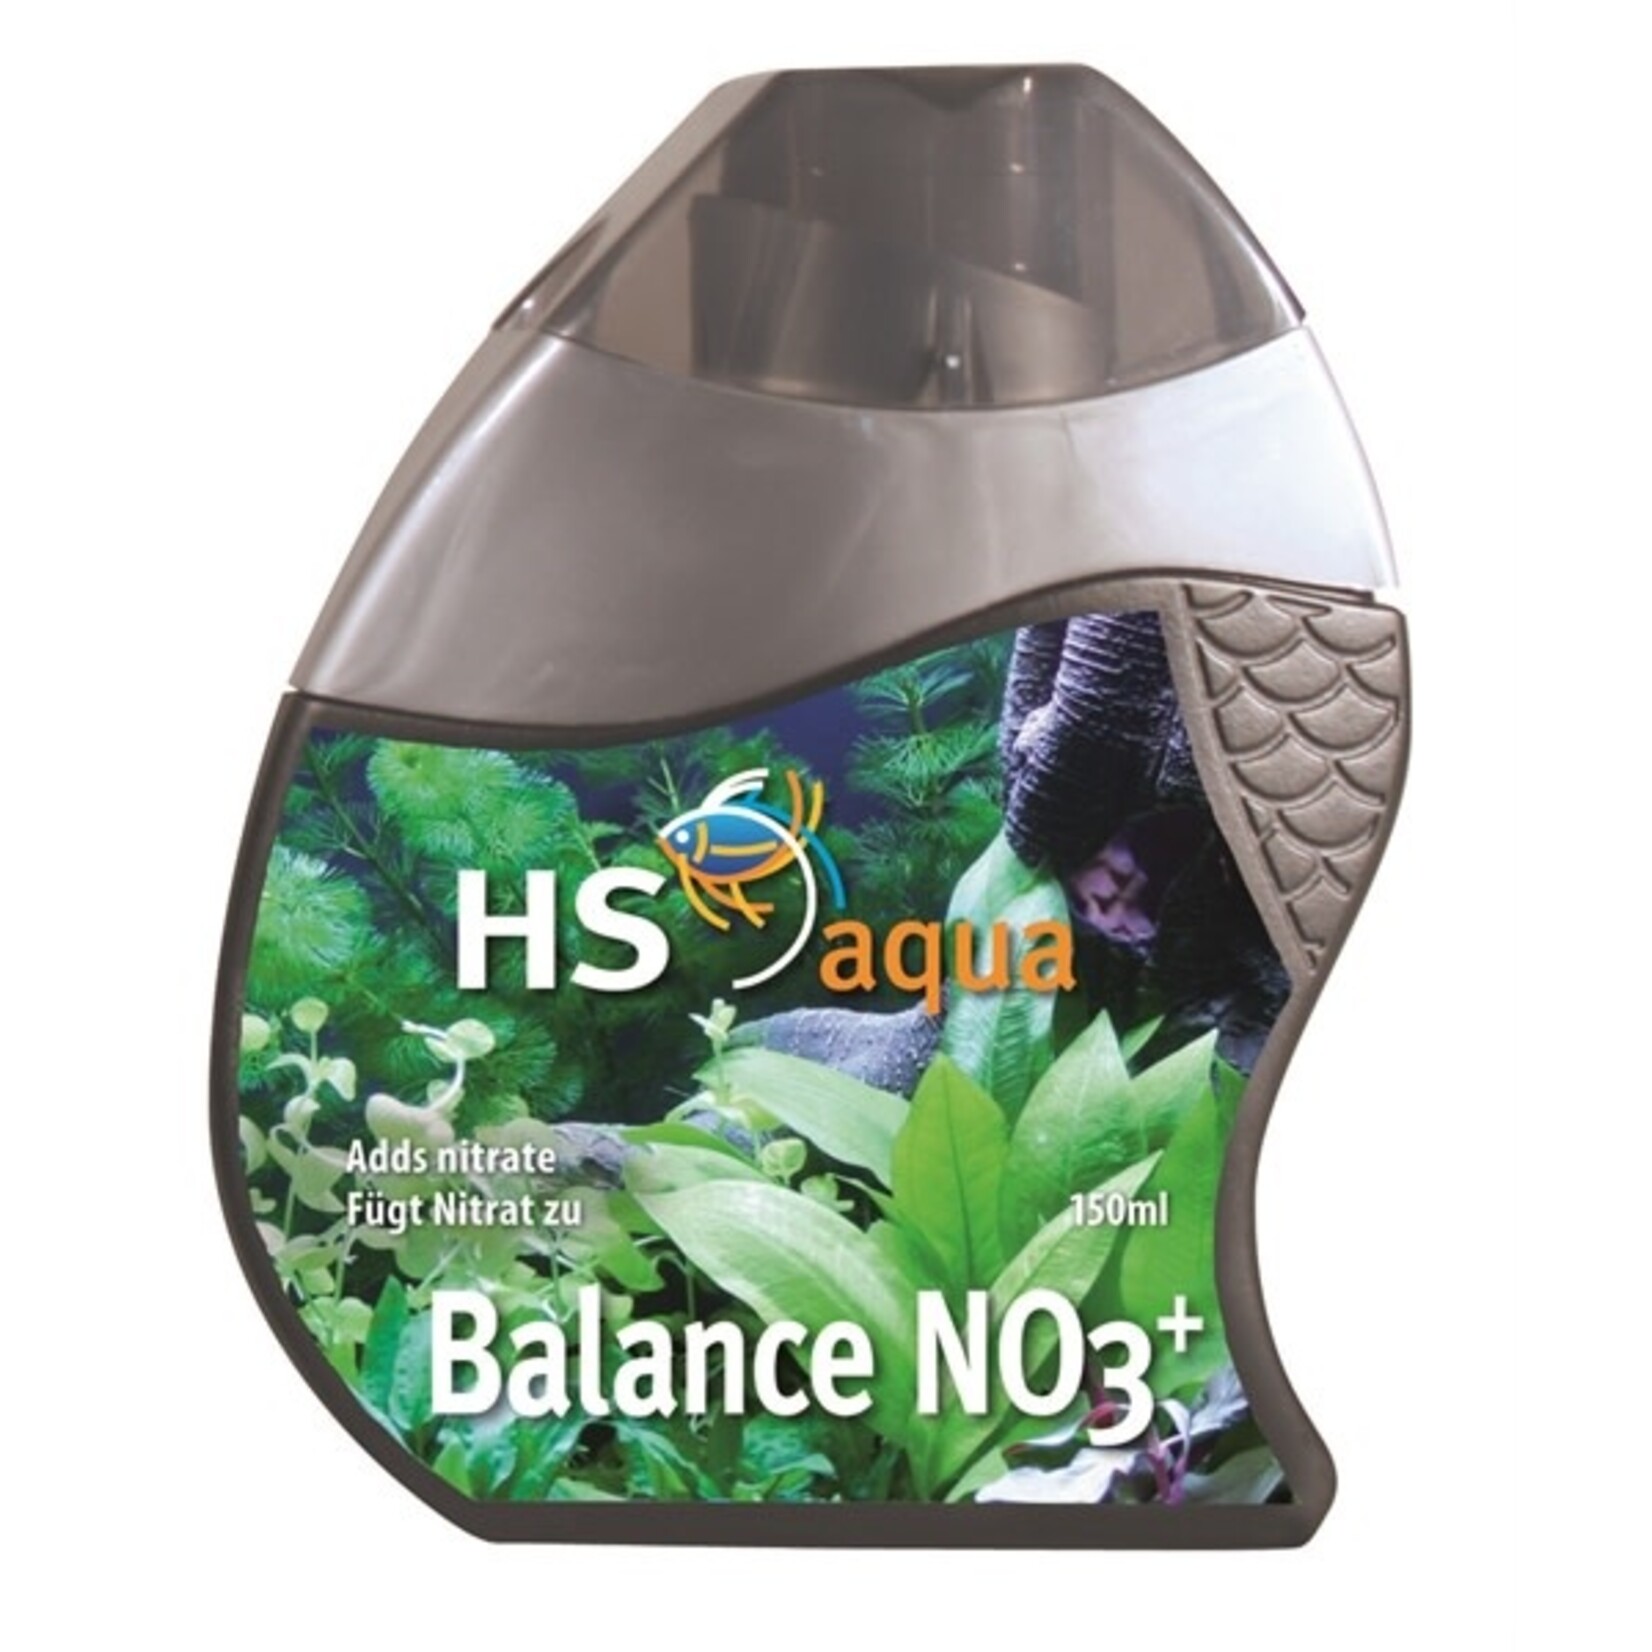 HS Aqua Balance no3 plus 150 ml